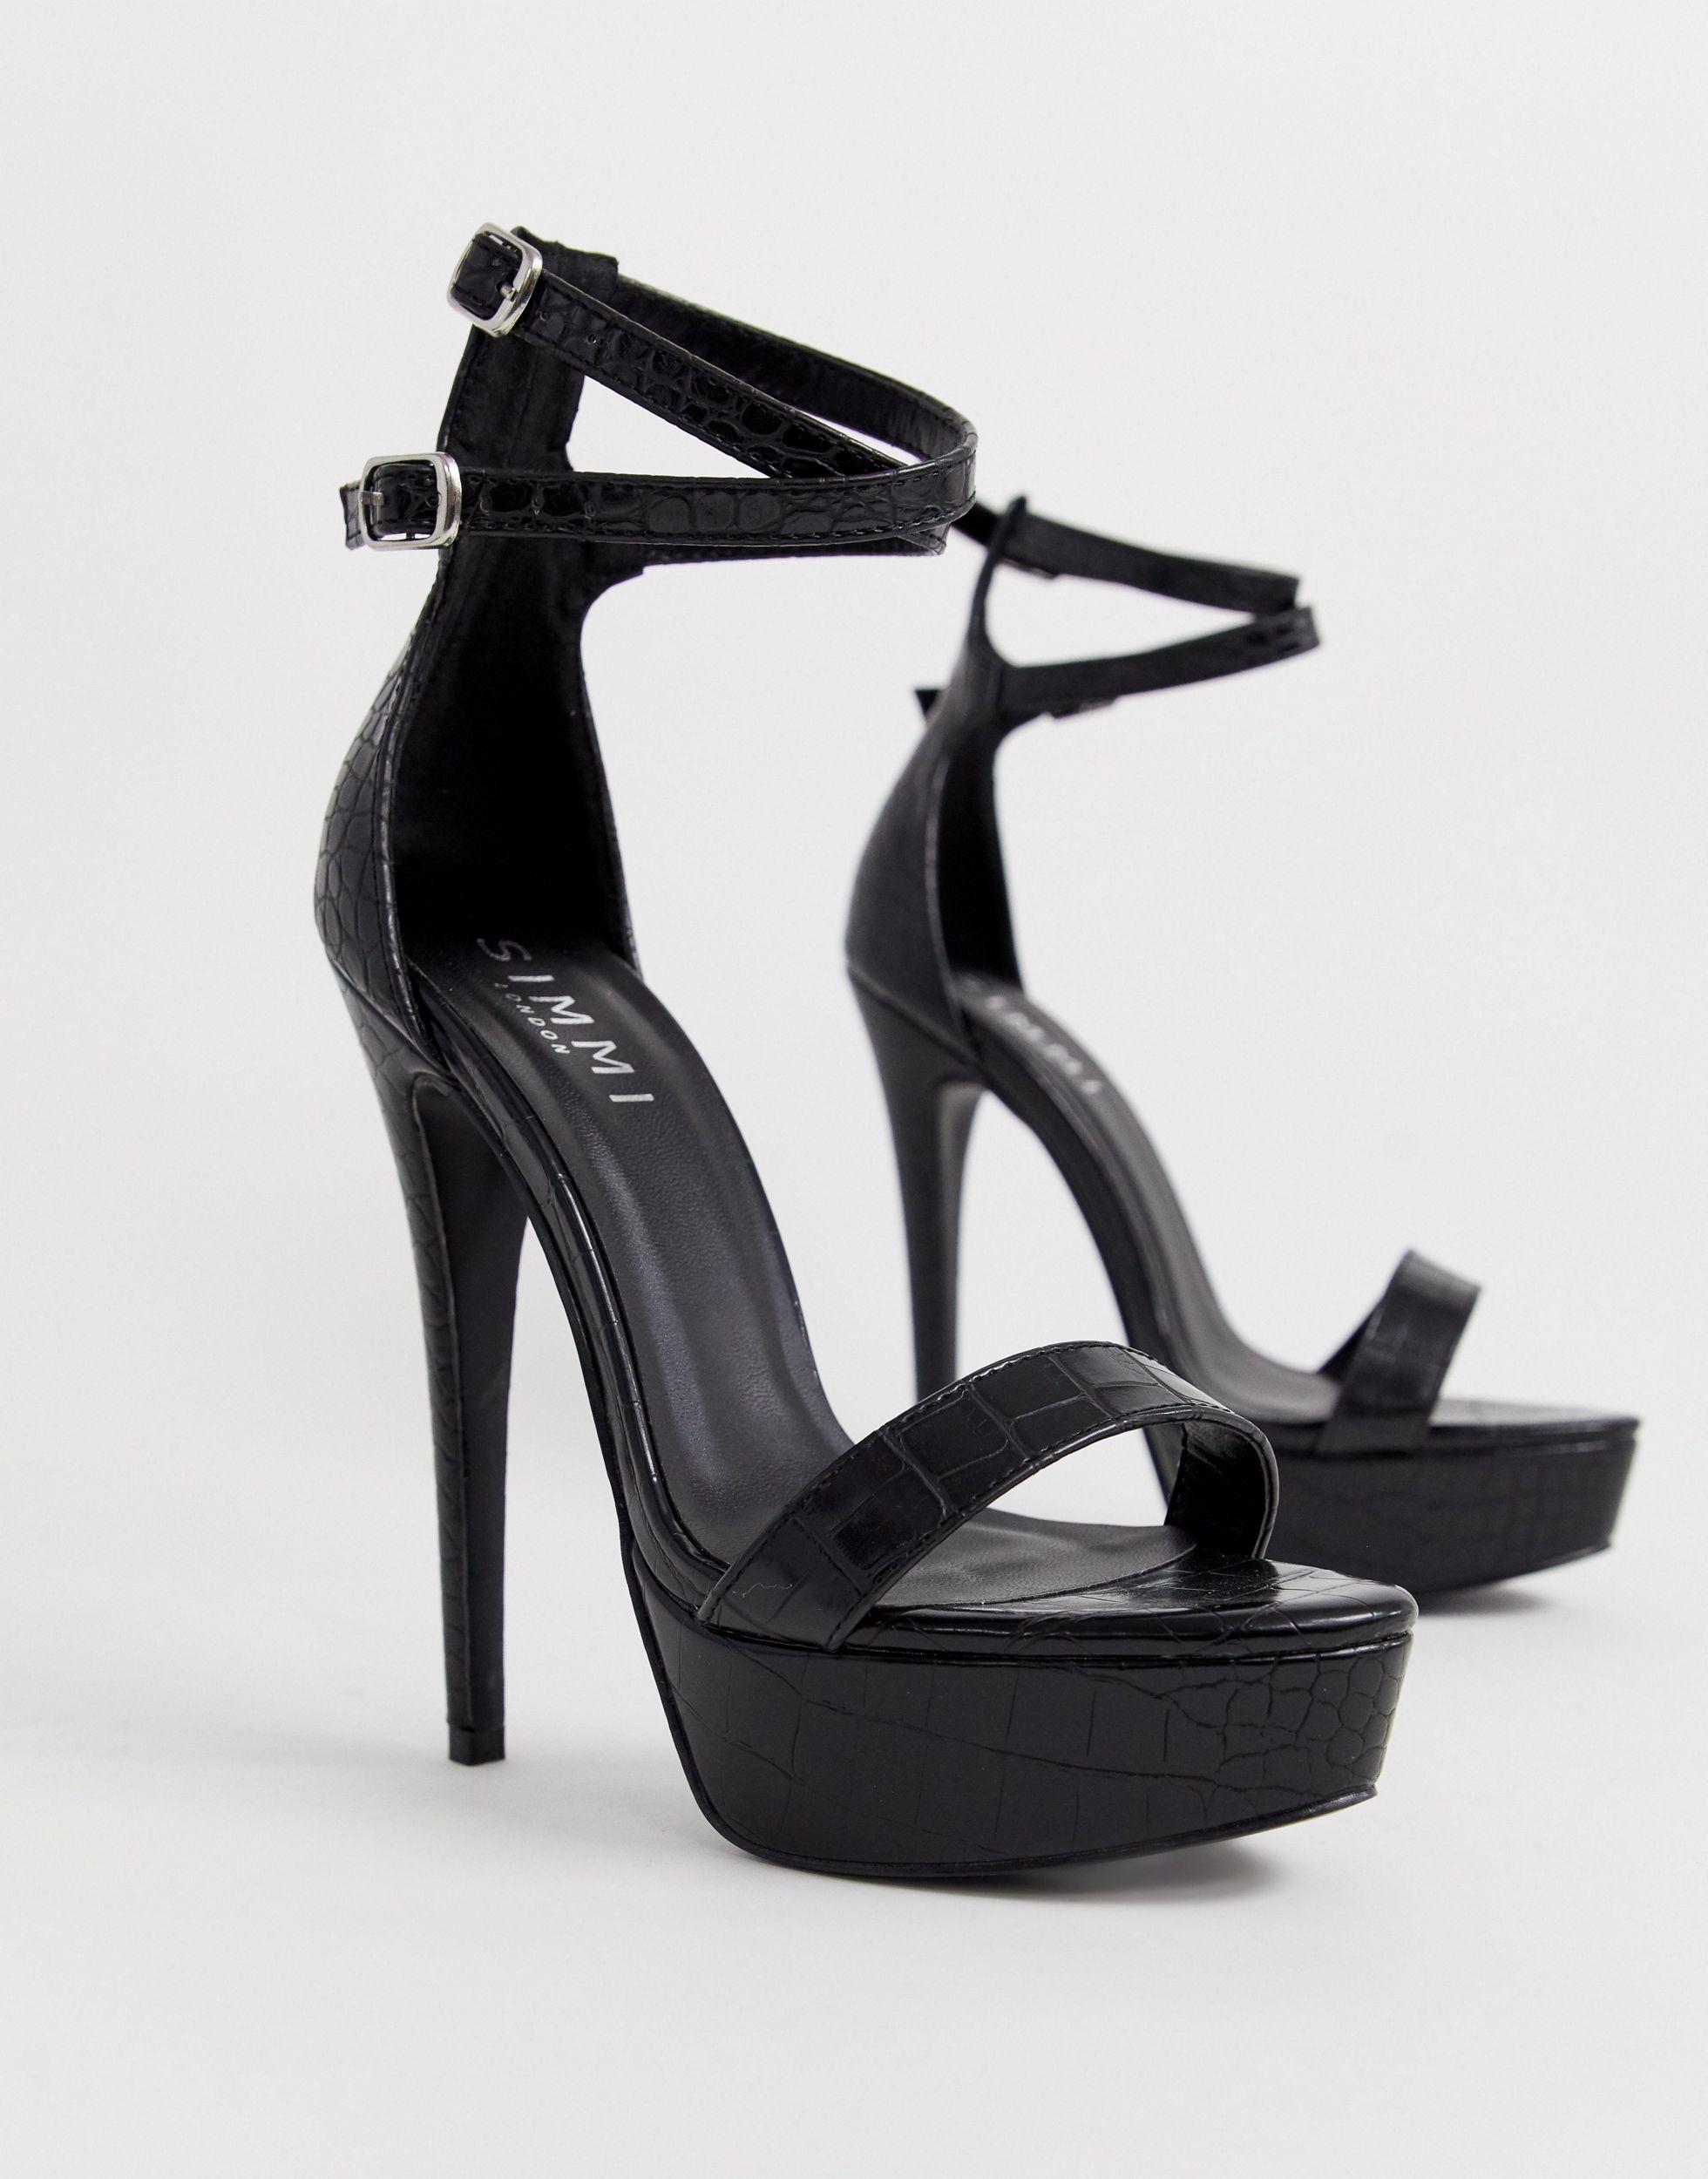 SIMMI Shoes Simmi London Scandal Croc Platform Sandals in Black | Lyst